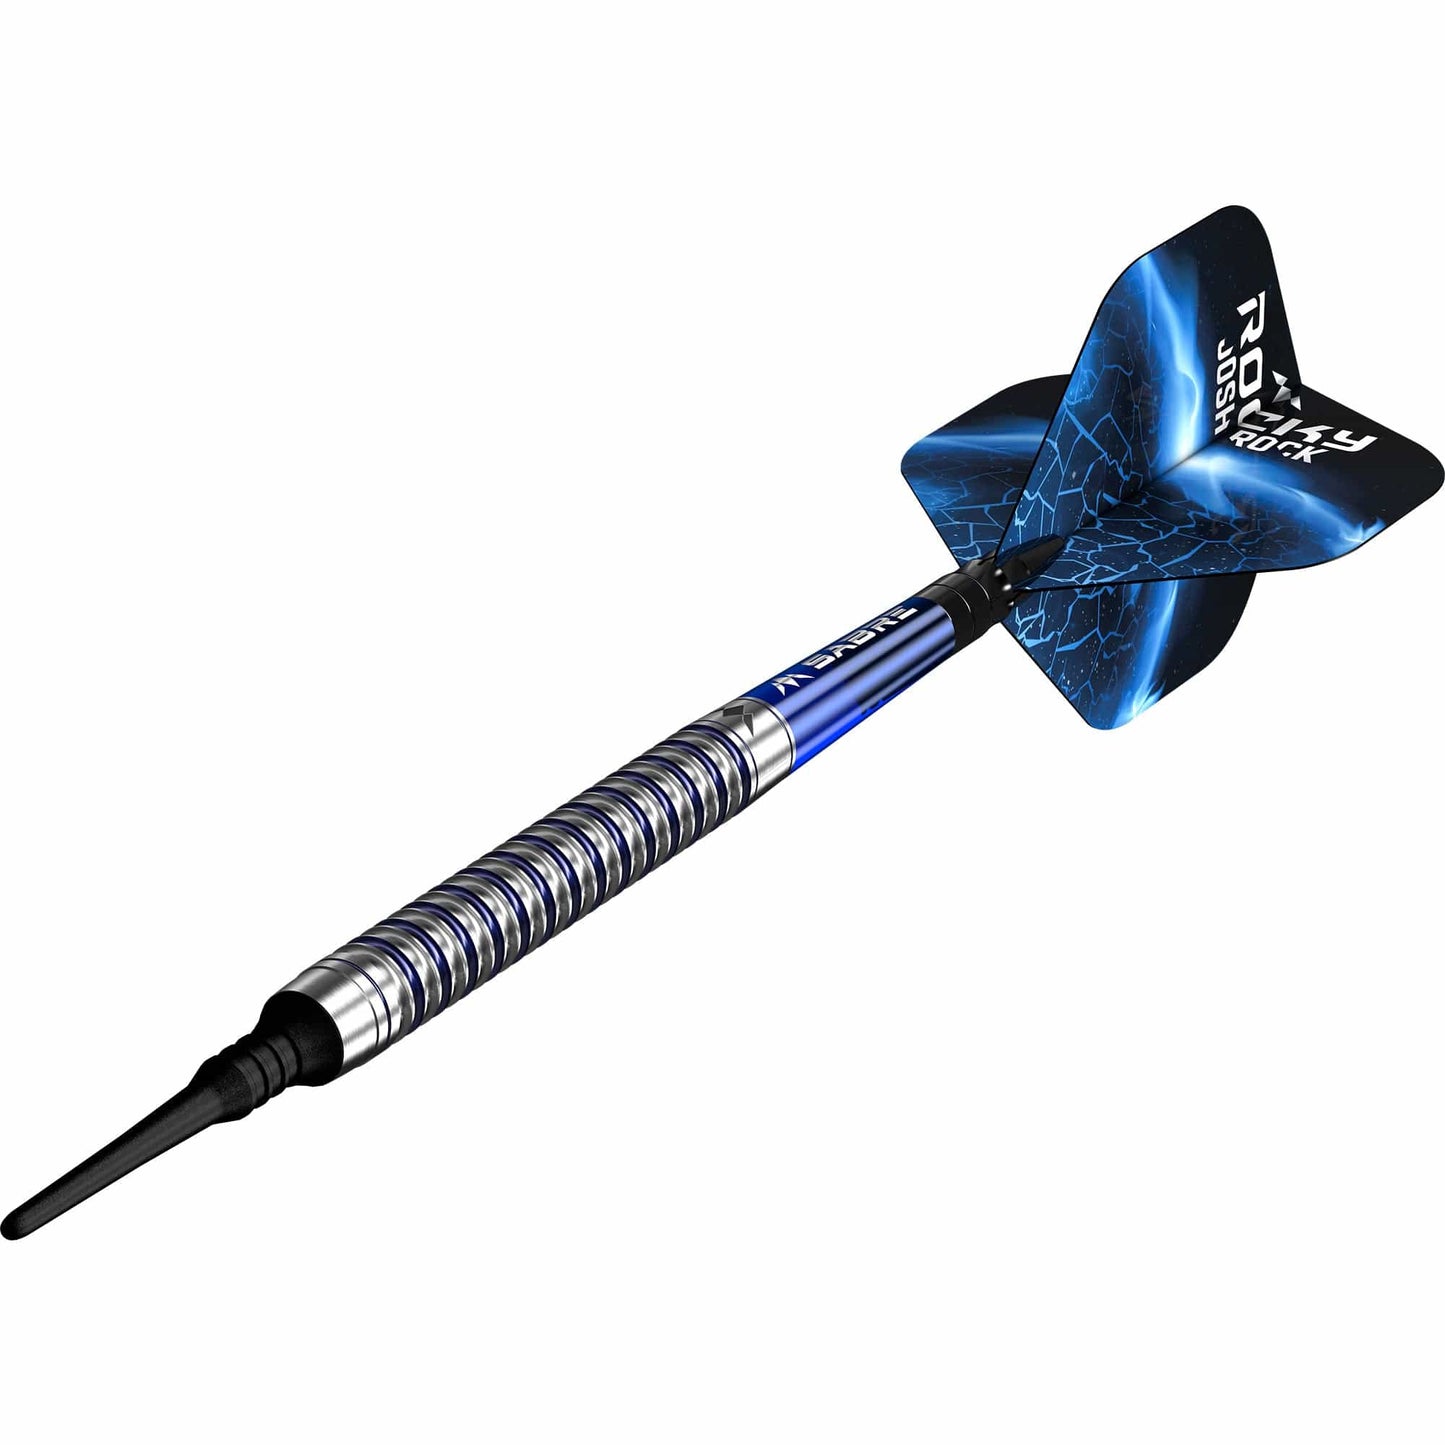 Mission Josh Rock v2 Darts - Soft Tip - 95% - Silver & Blue PVD 18g